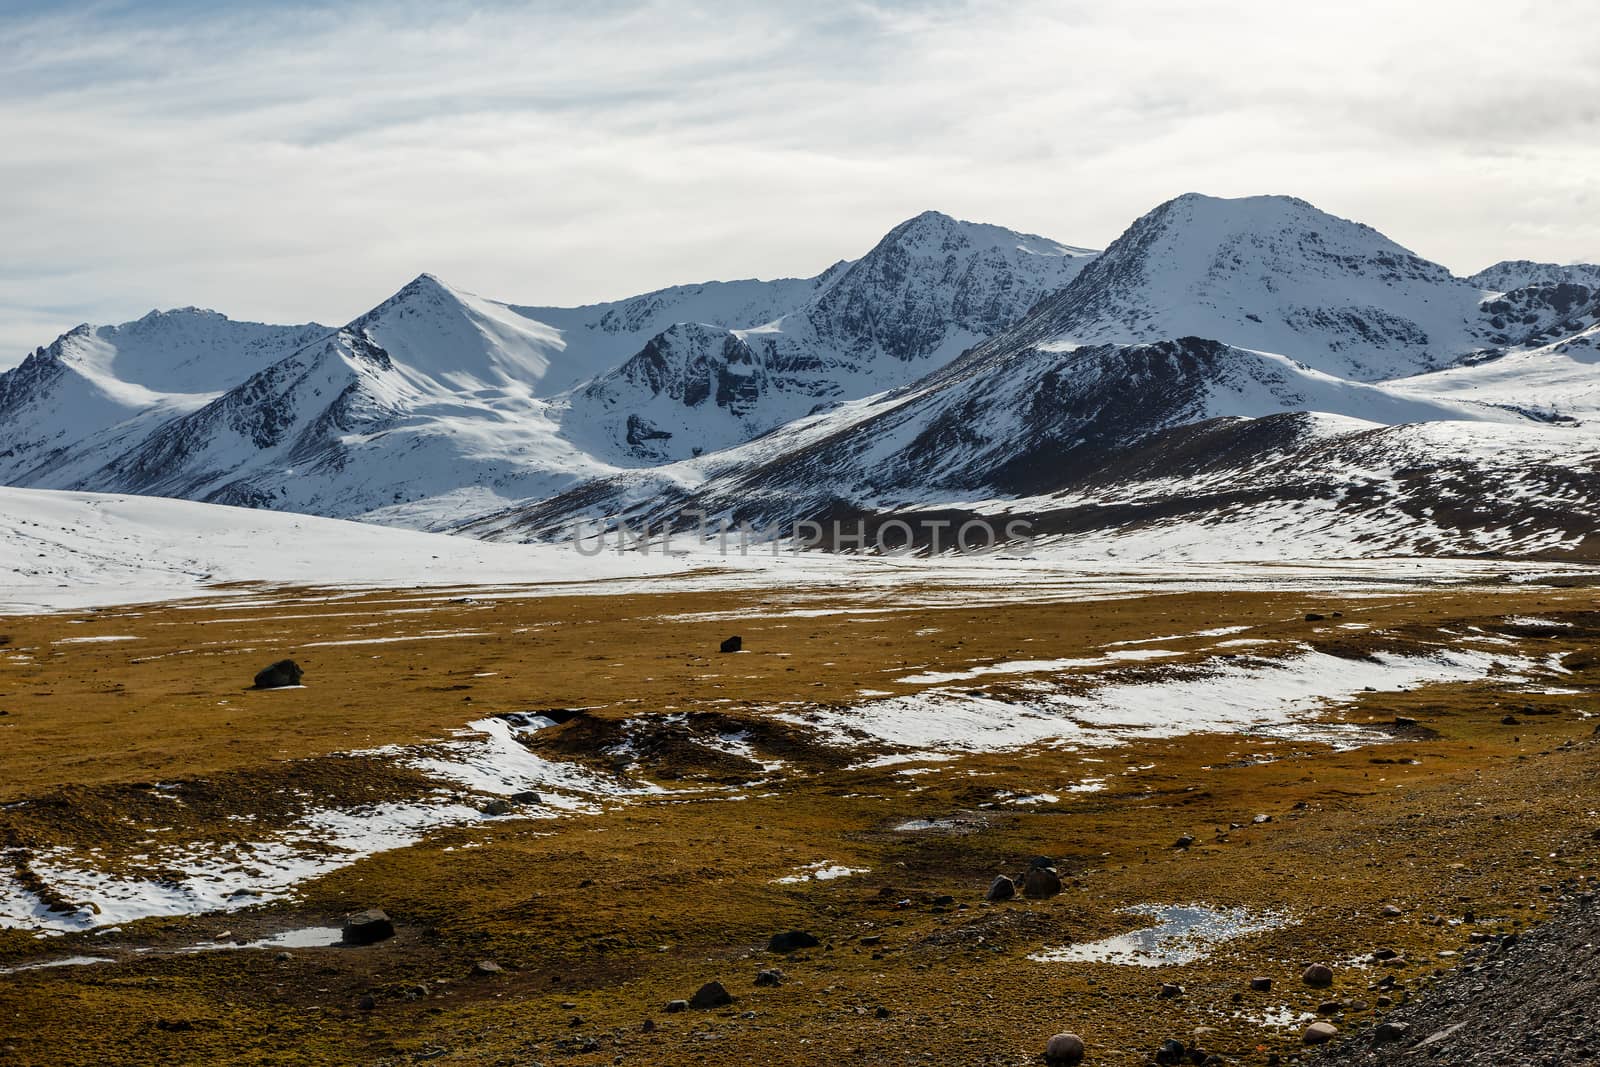 snowy mountain peaks on the Ala Bel pass, Bishke-Osh highway, M41, Kyrgyzstan